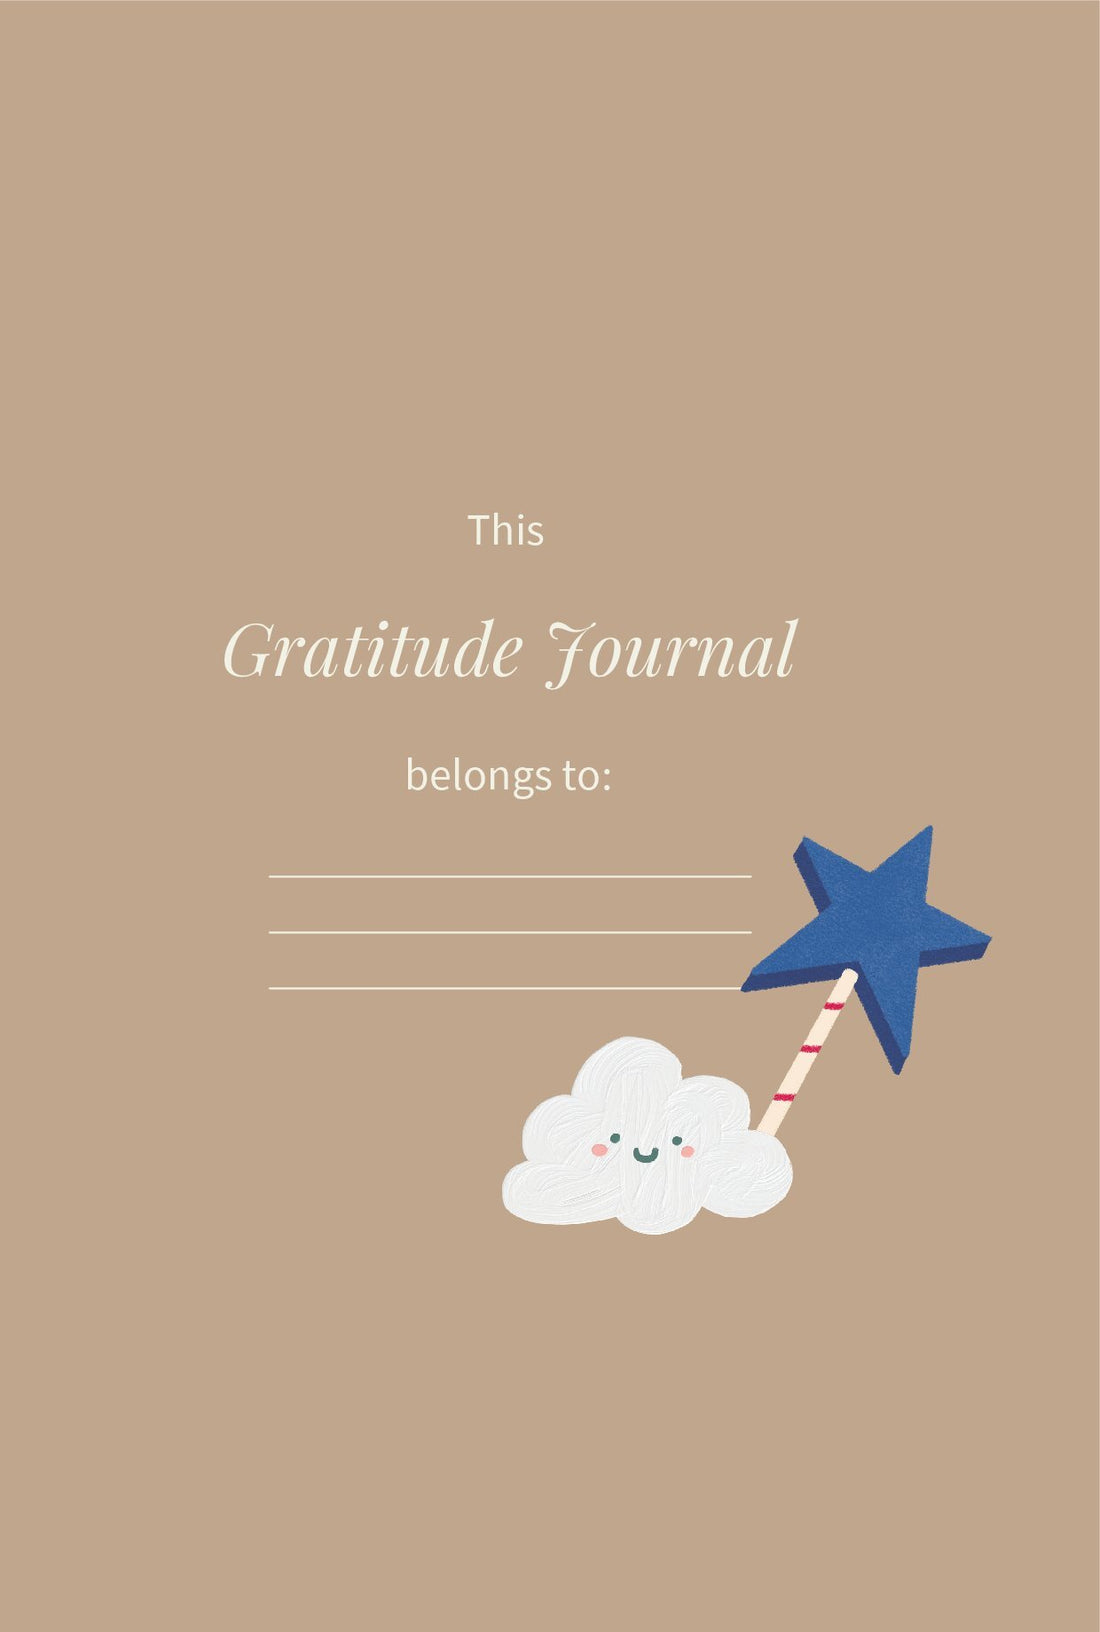 Mon journal de gratitude